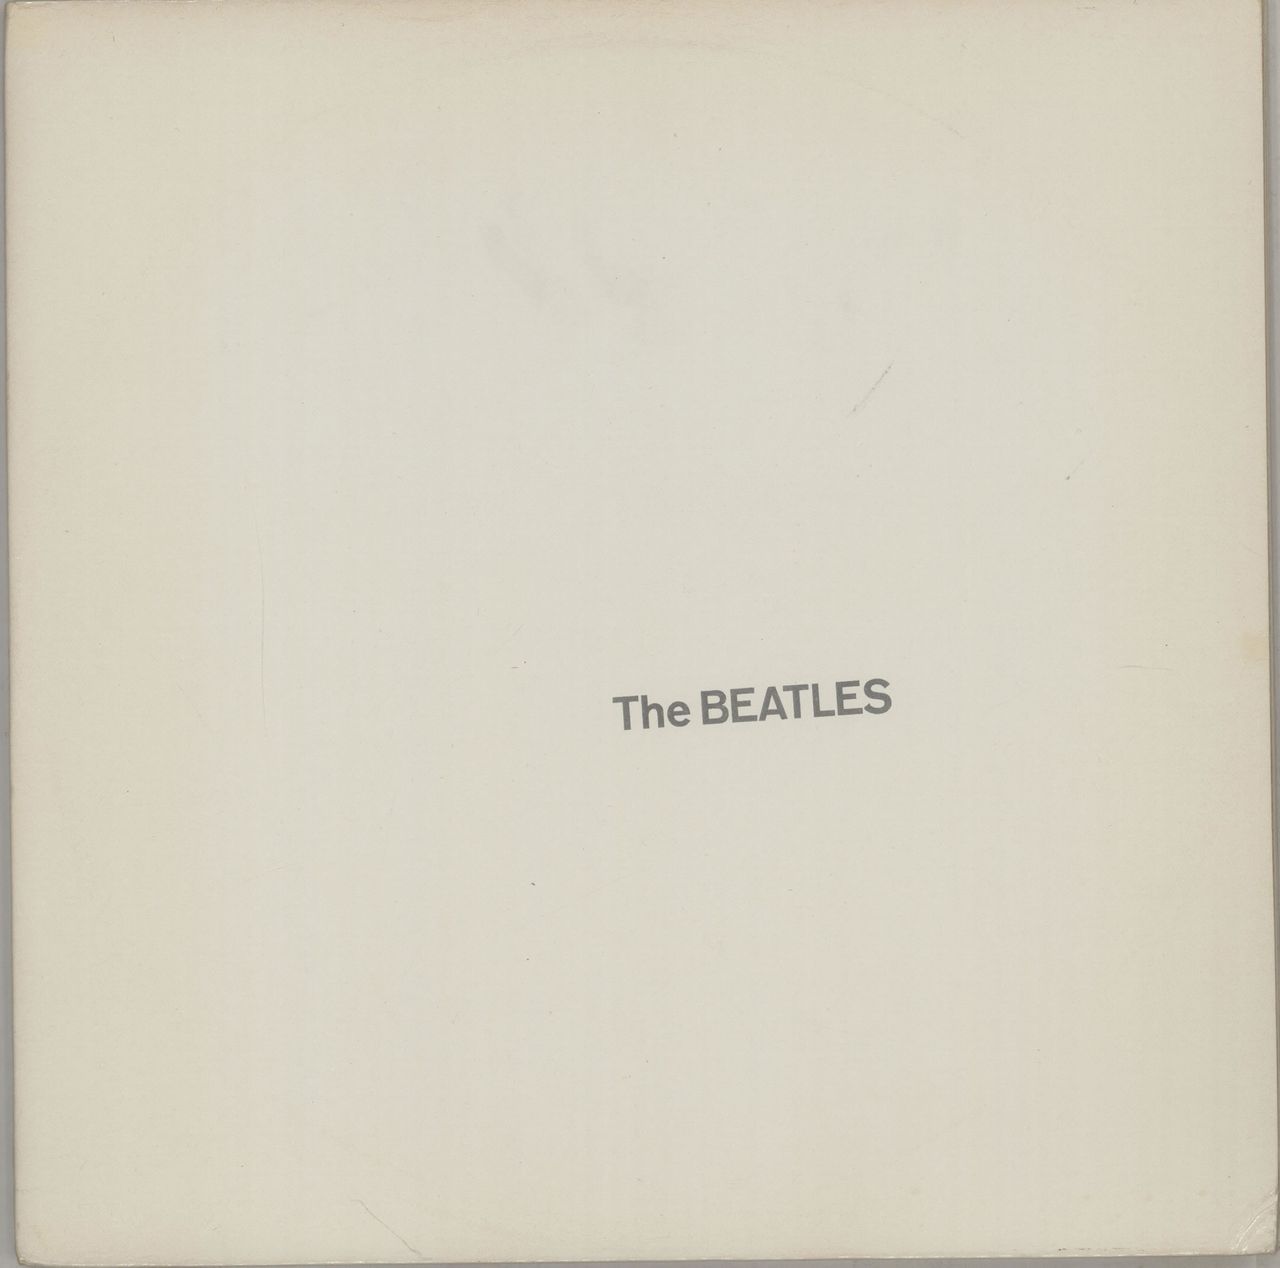 The Beatles The Beatles [White Album] - White Vinyl - EX US 2-LP vinyl record set (Double LP Album) SEBX-11841